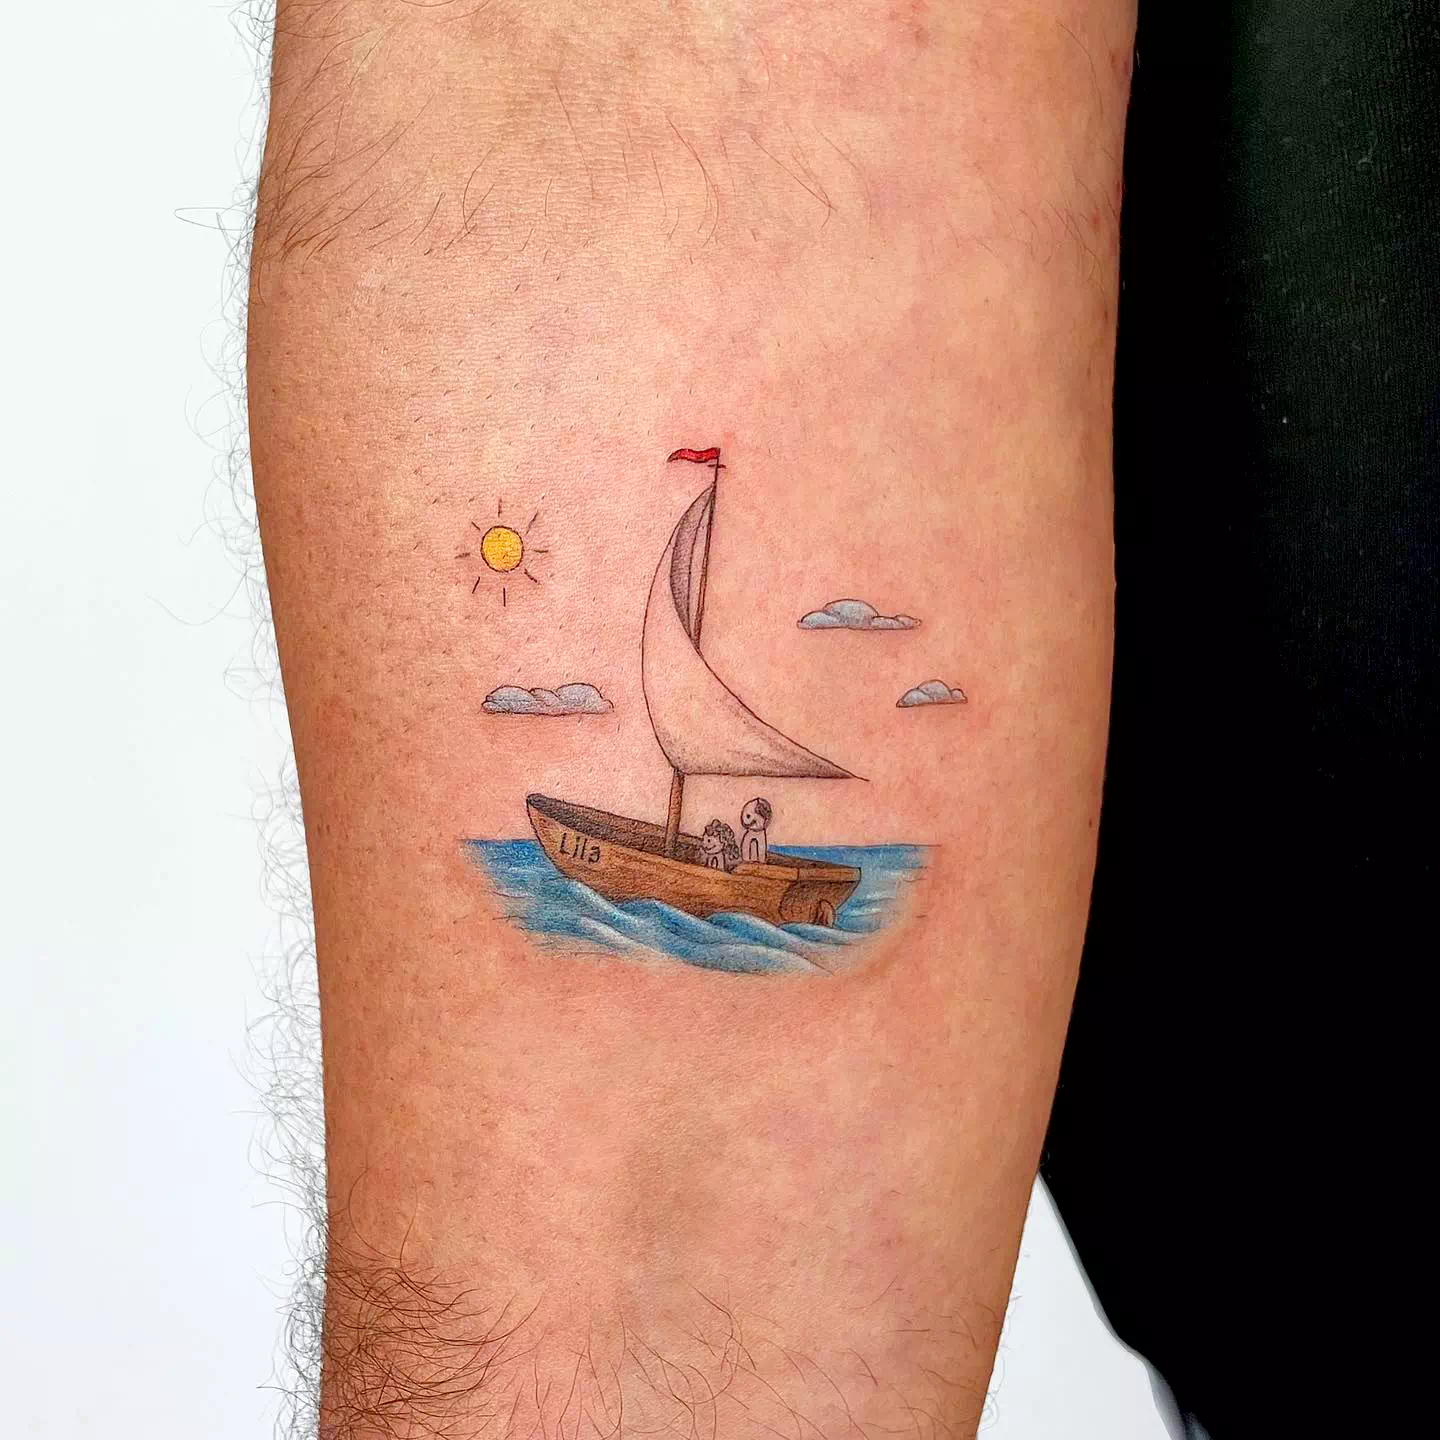 Tatuaje de pulsera de barco pequeño